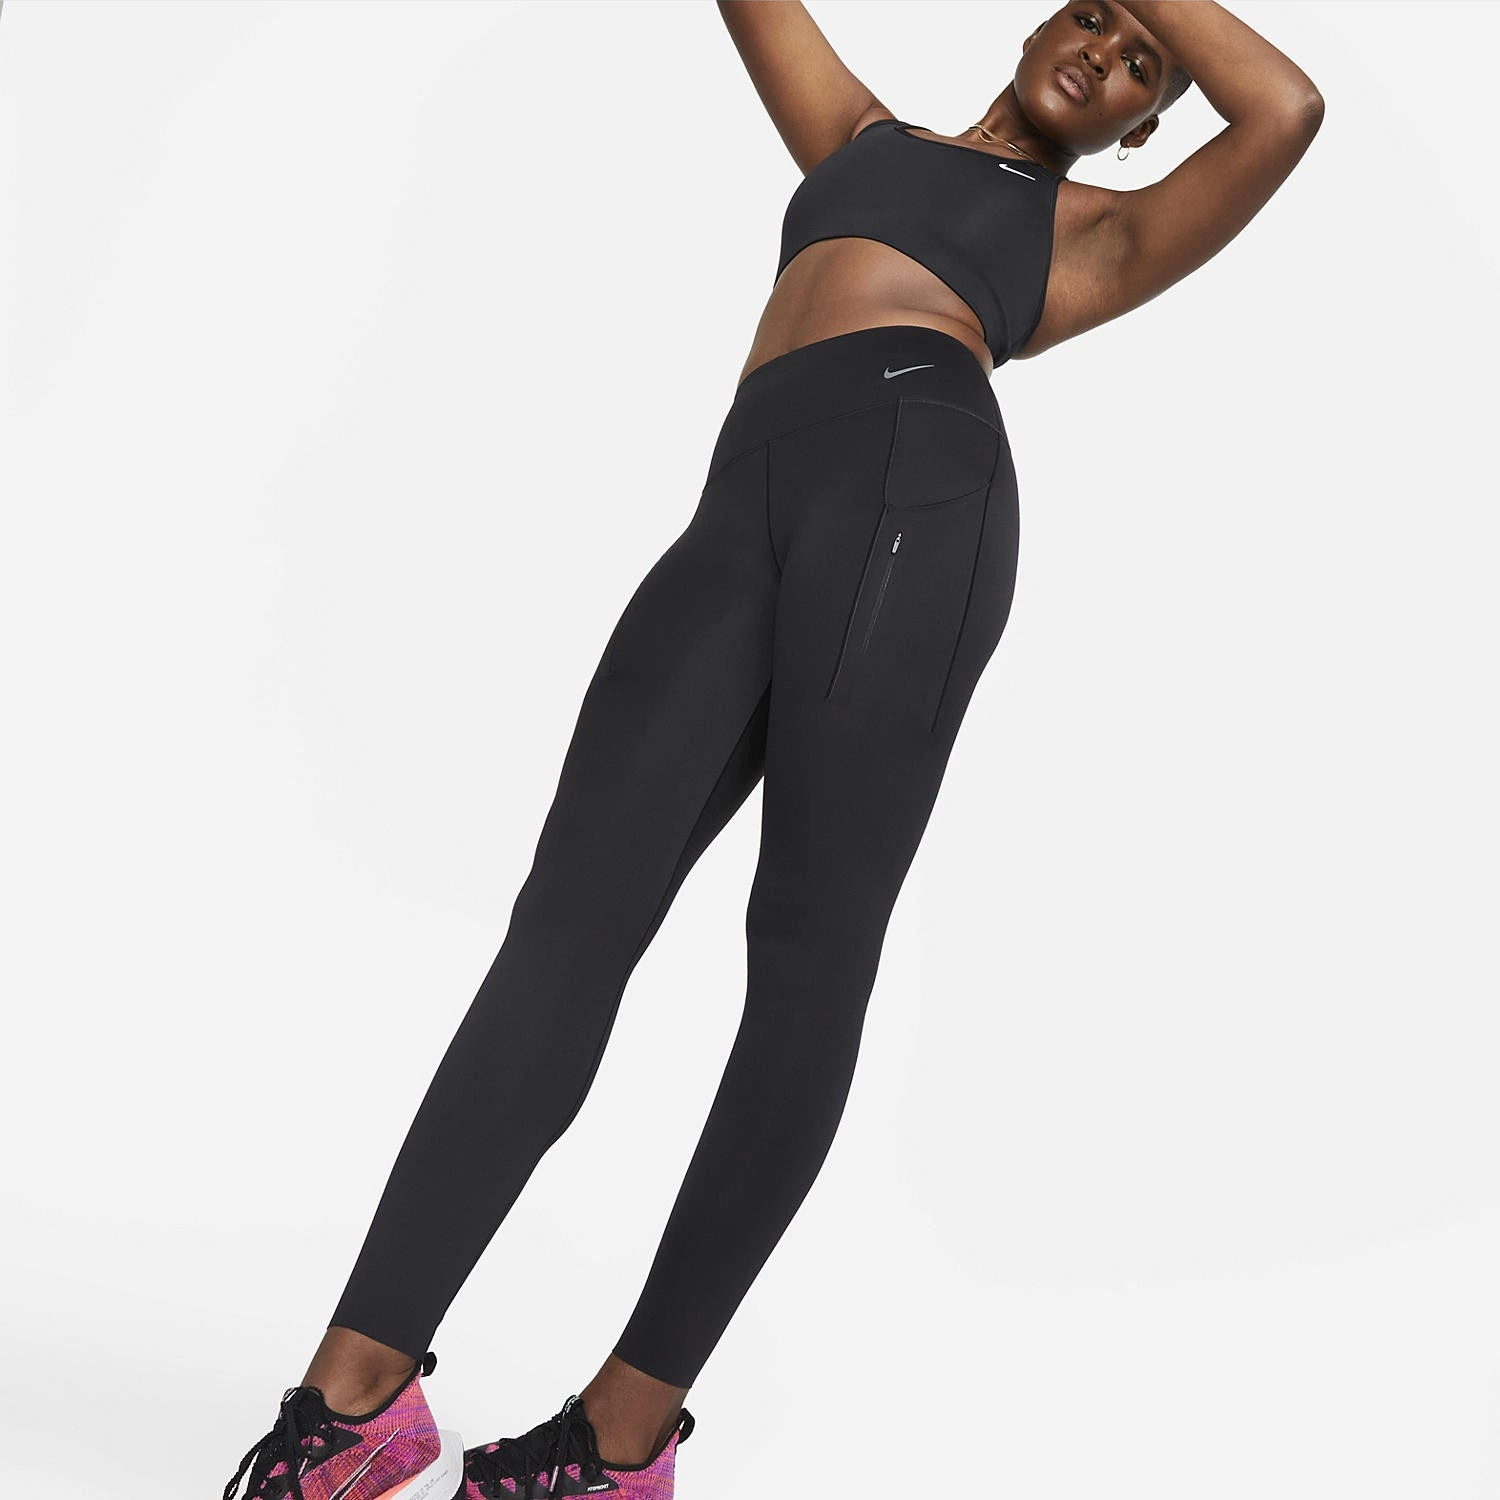 Legginsy Damskie Nike Pro Fitness Spodnie Sport S - Ceny i opinie